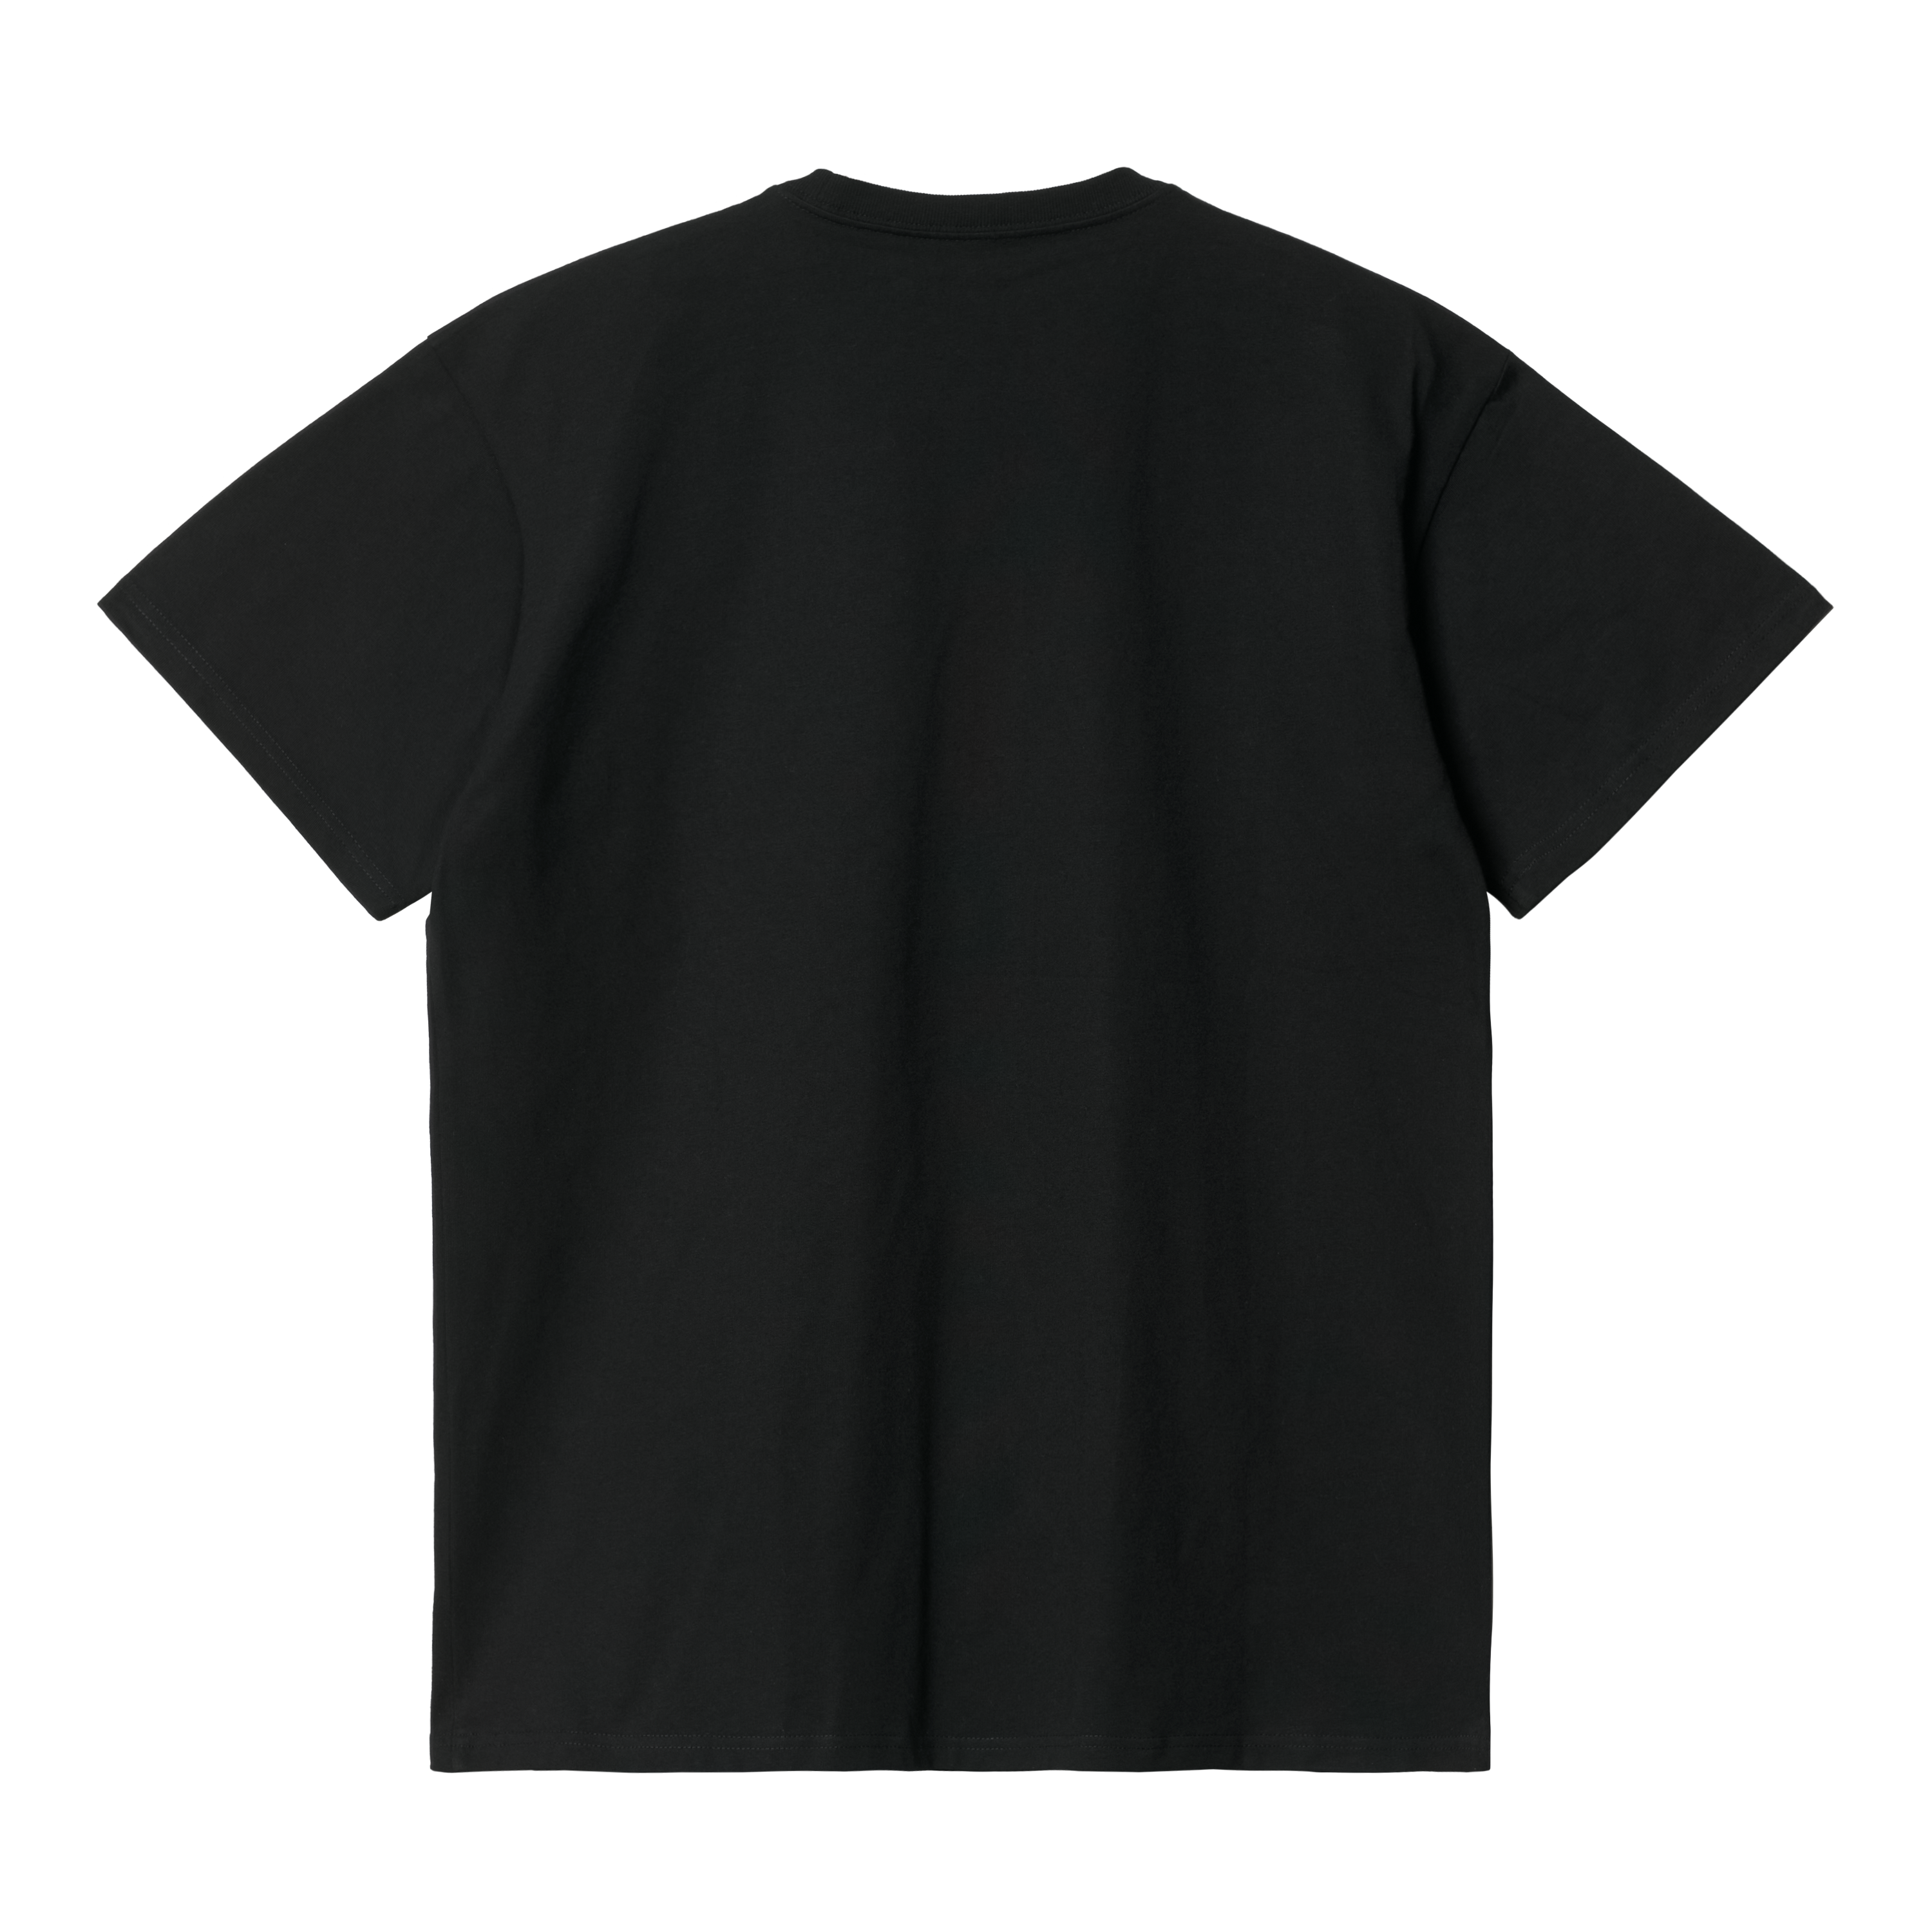 Carhartt WIP S/S Chase T-Shirt | Carhartt WIP